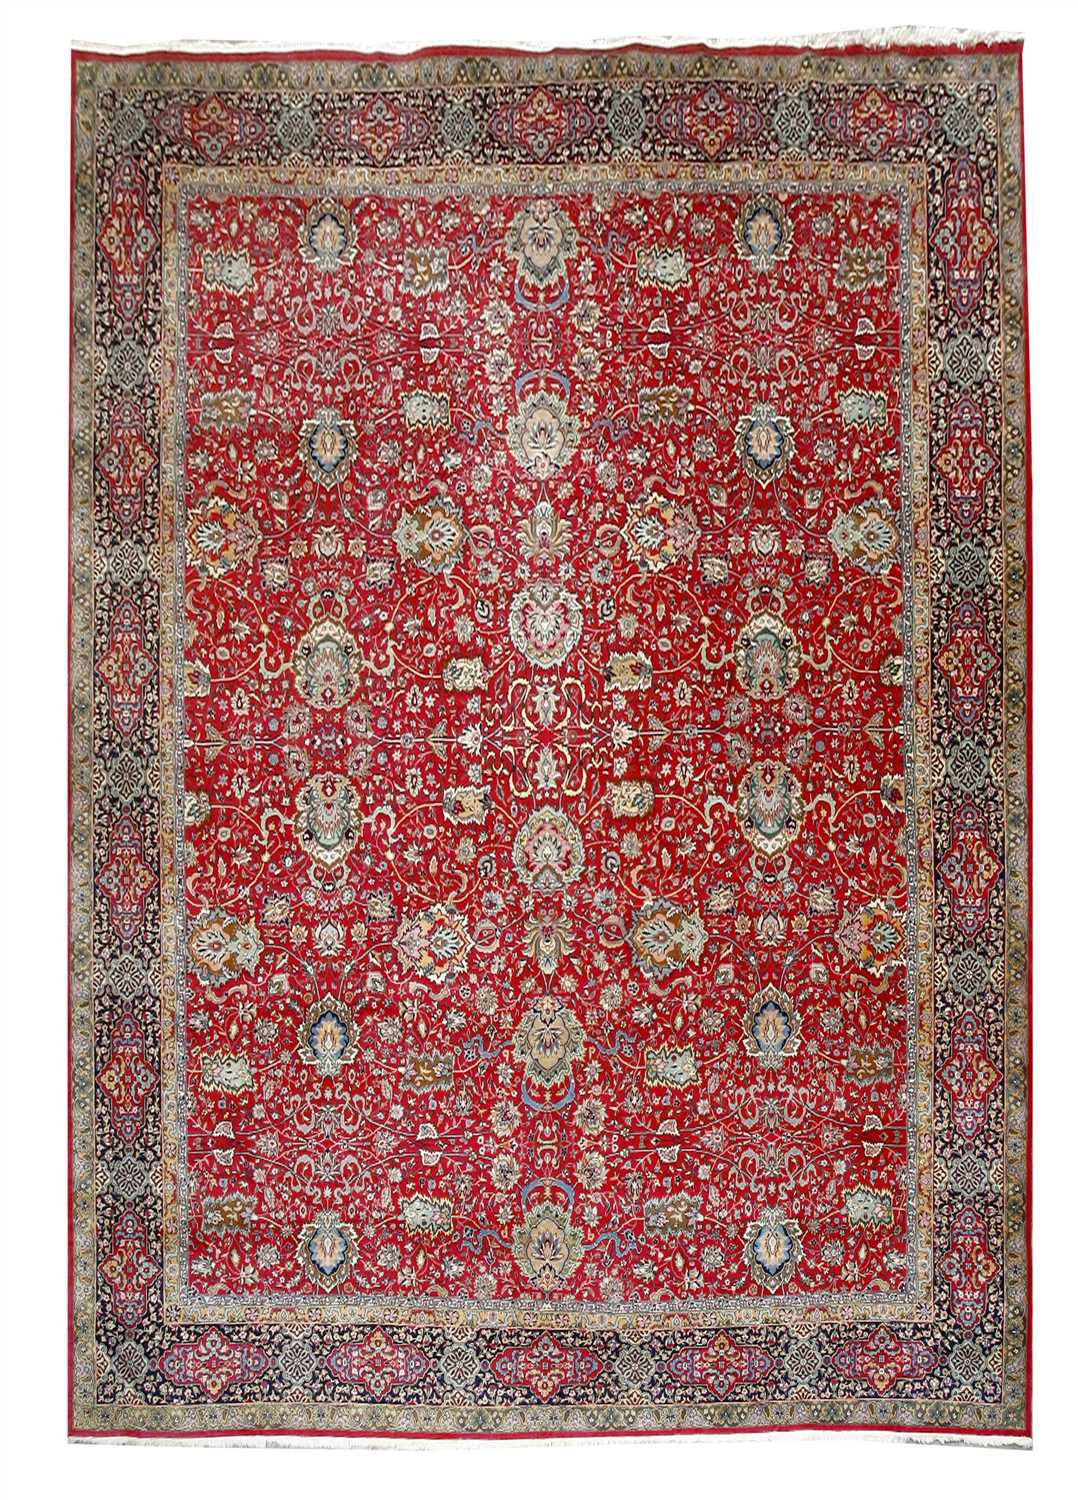 Lot 232 - A large Indian Kashmir carpet